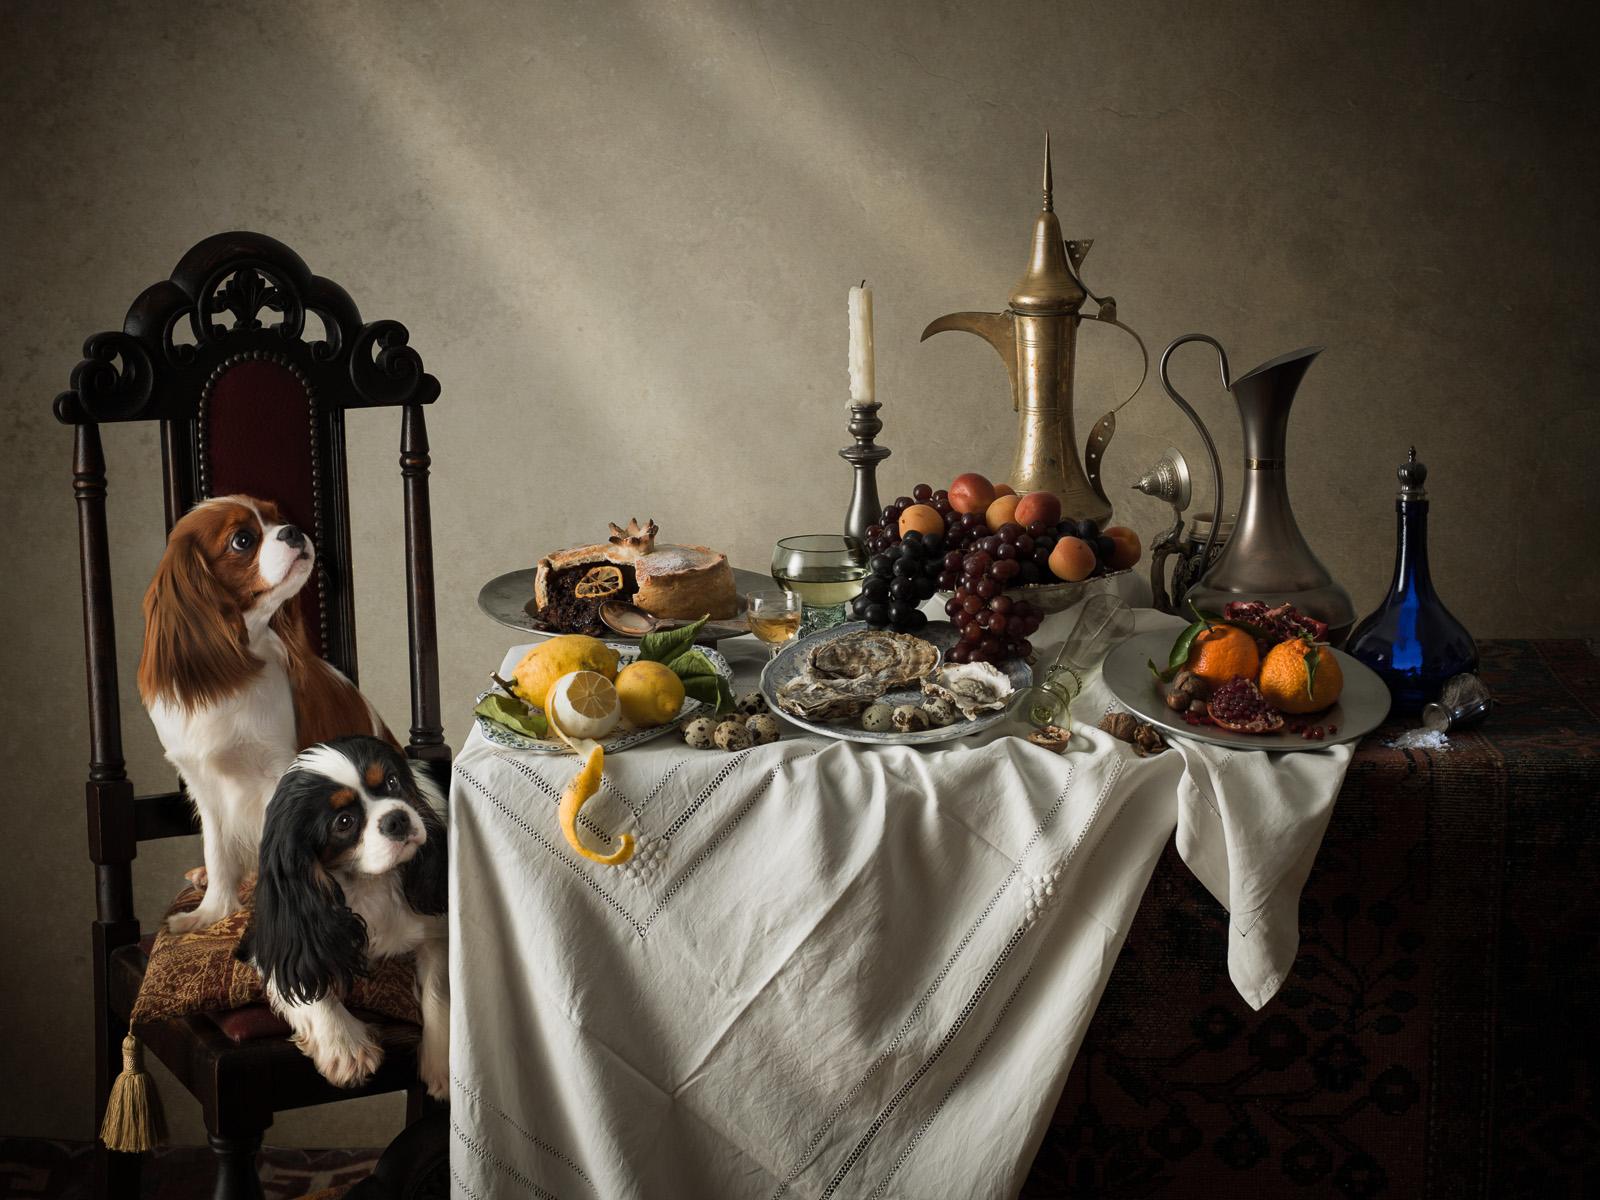 Tim Platt Still-Life Photograph - Dutch dog #3 King Charles Spaniels - Animal signed limited edition contemporary